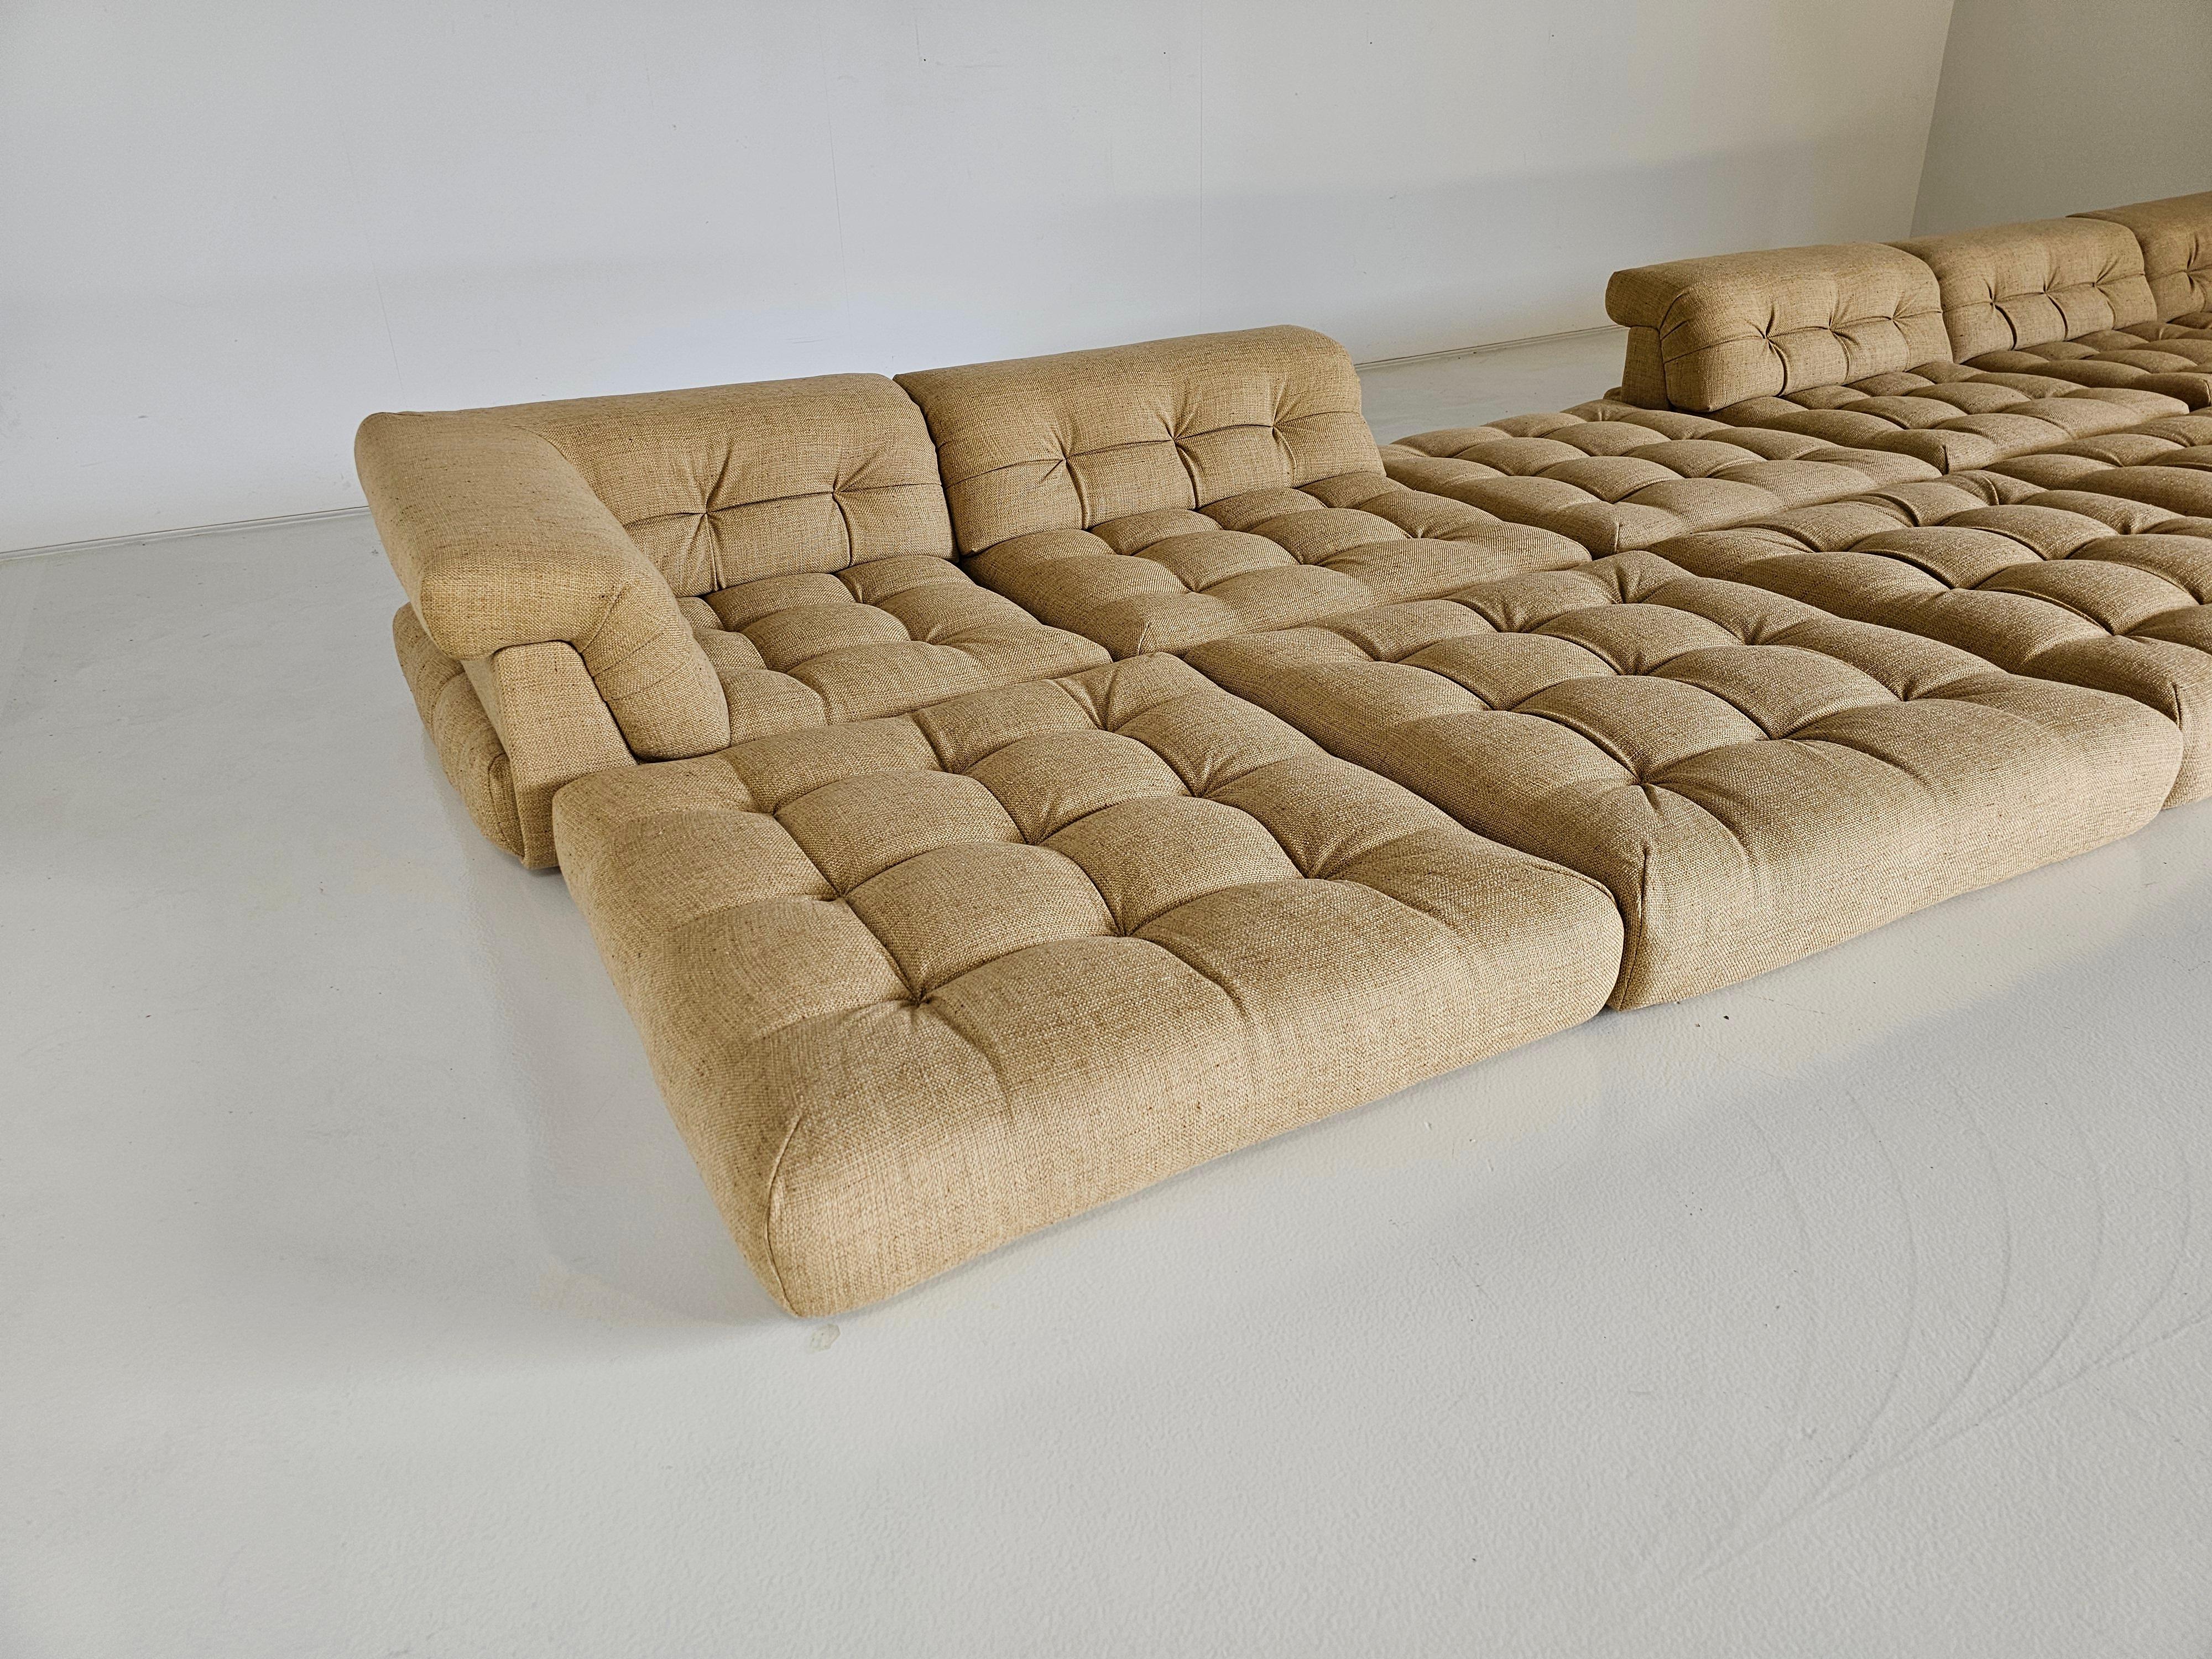 Late 20th Century Mah Jong sofa in beige/sand fabric by Hans Hopfer, Roche Bobois, France, 1970s